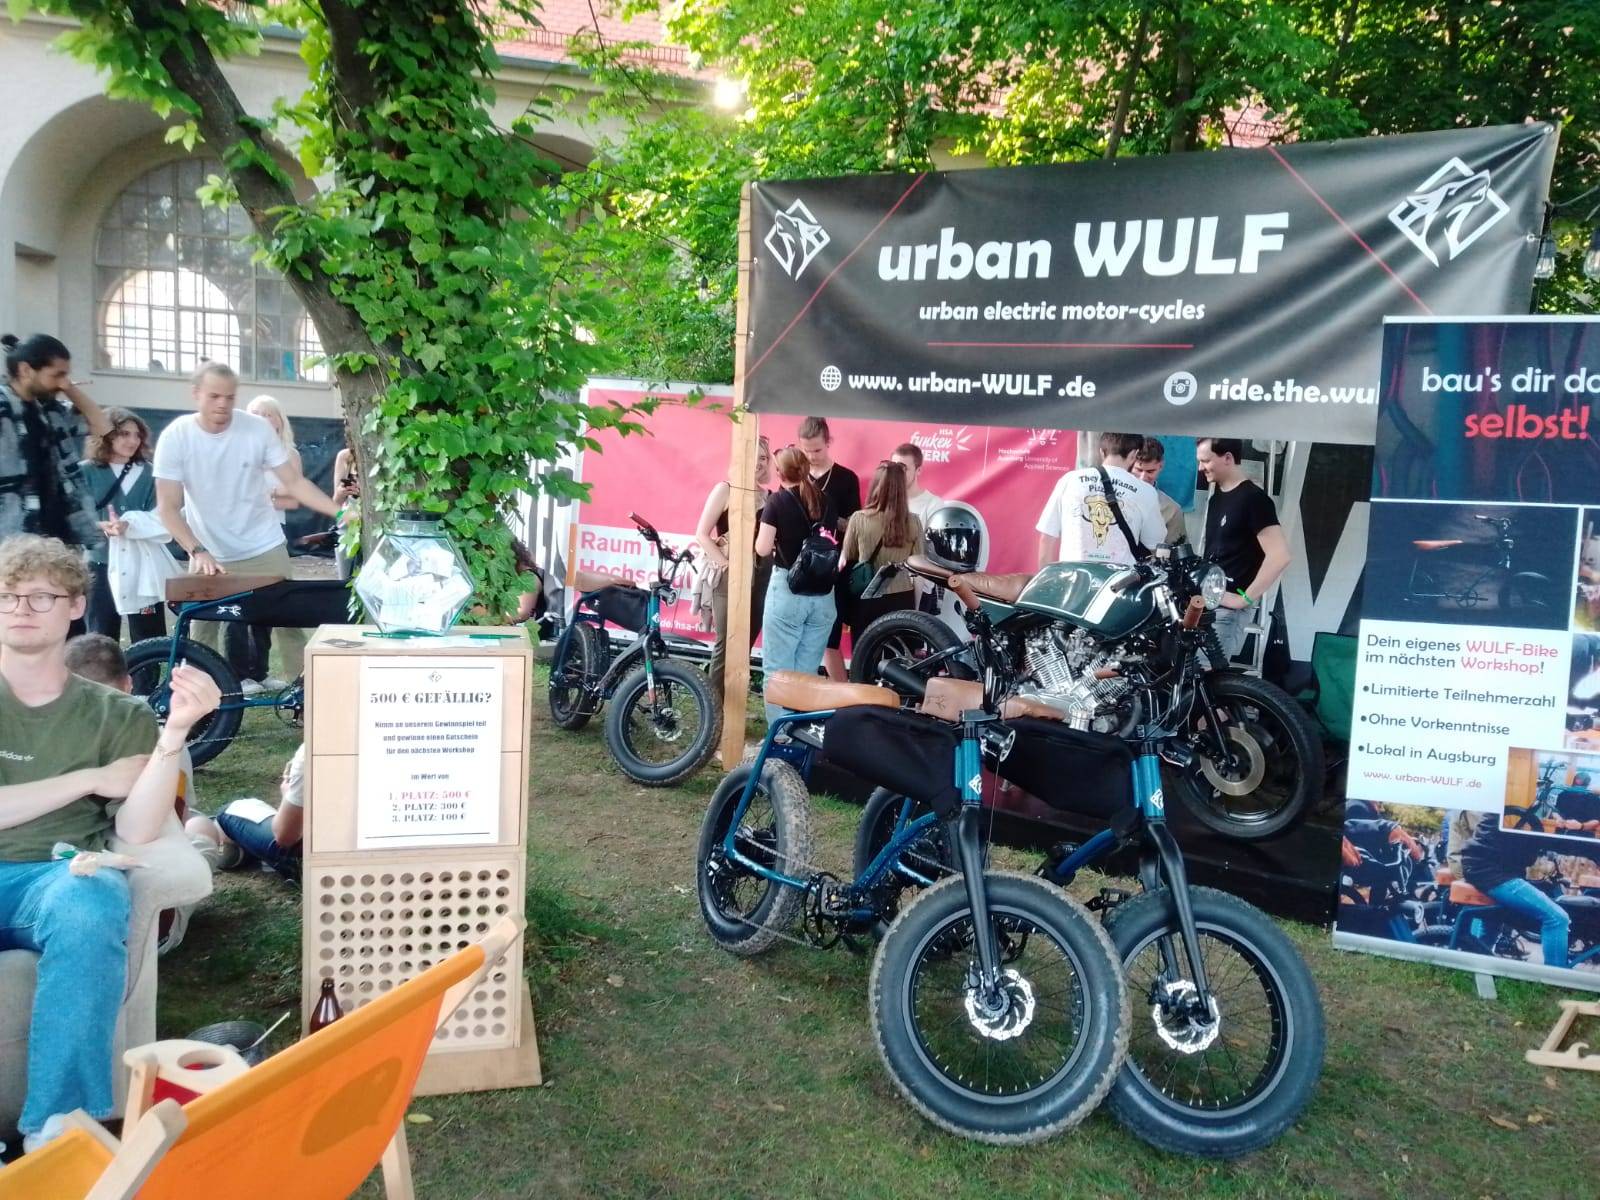 Ride the urbanWulf!